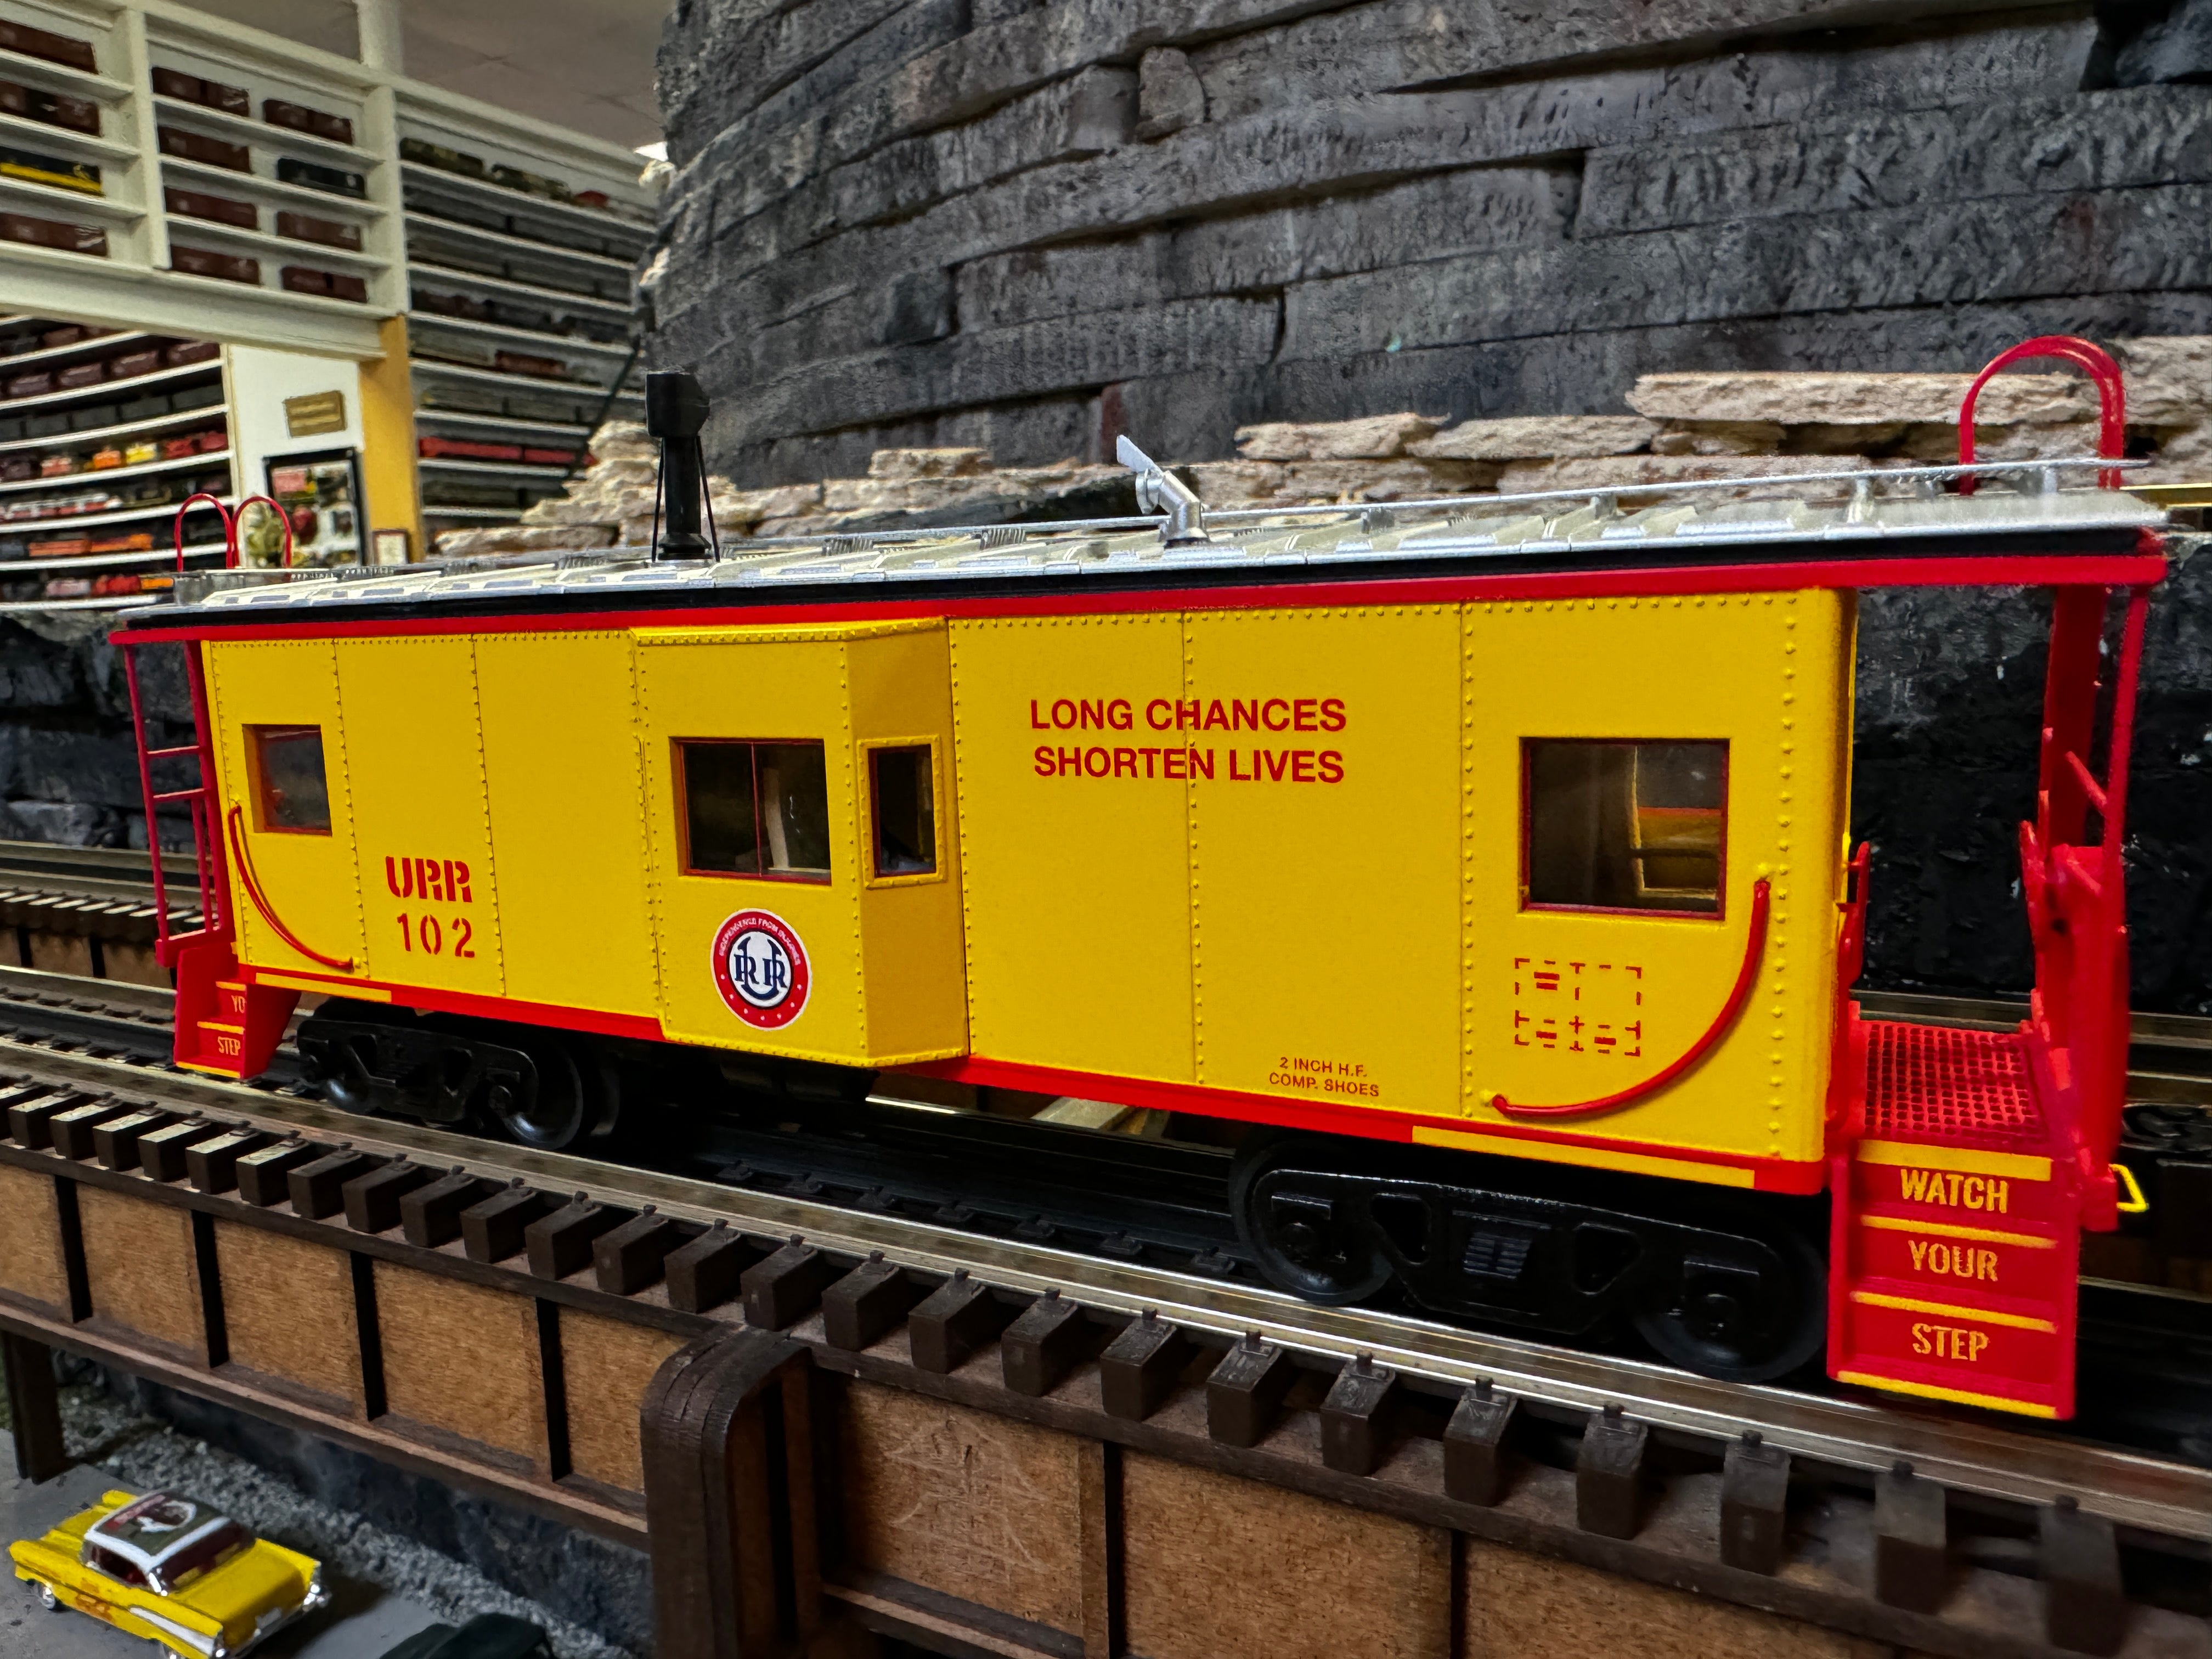 Lionel 2322060 - Legacy Hot Metal "Union Railroad" Train Freight Set